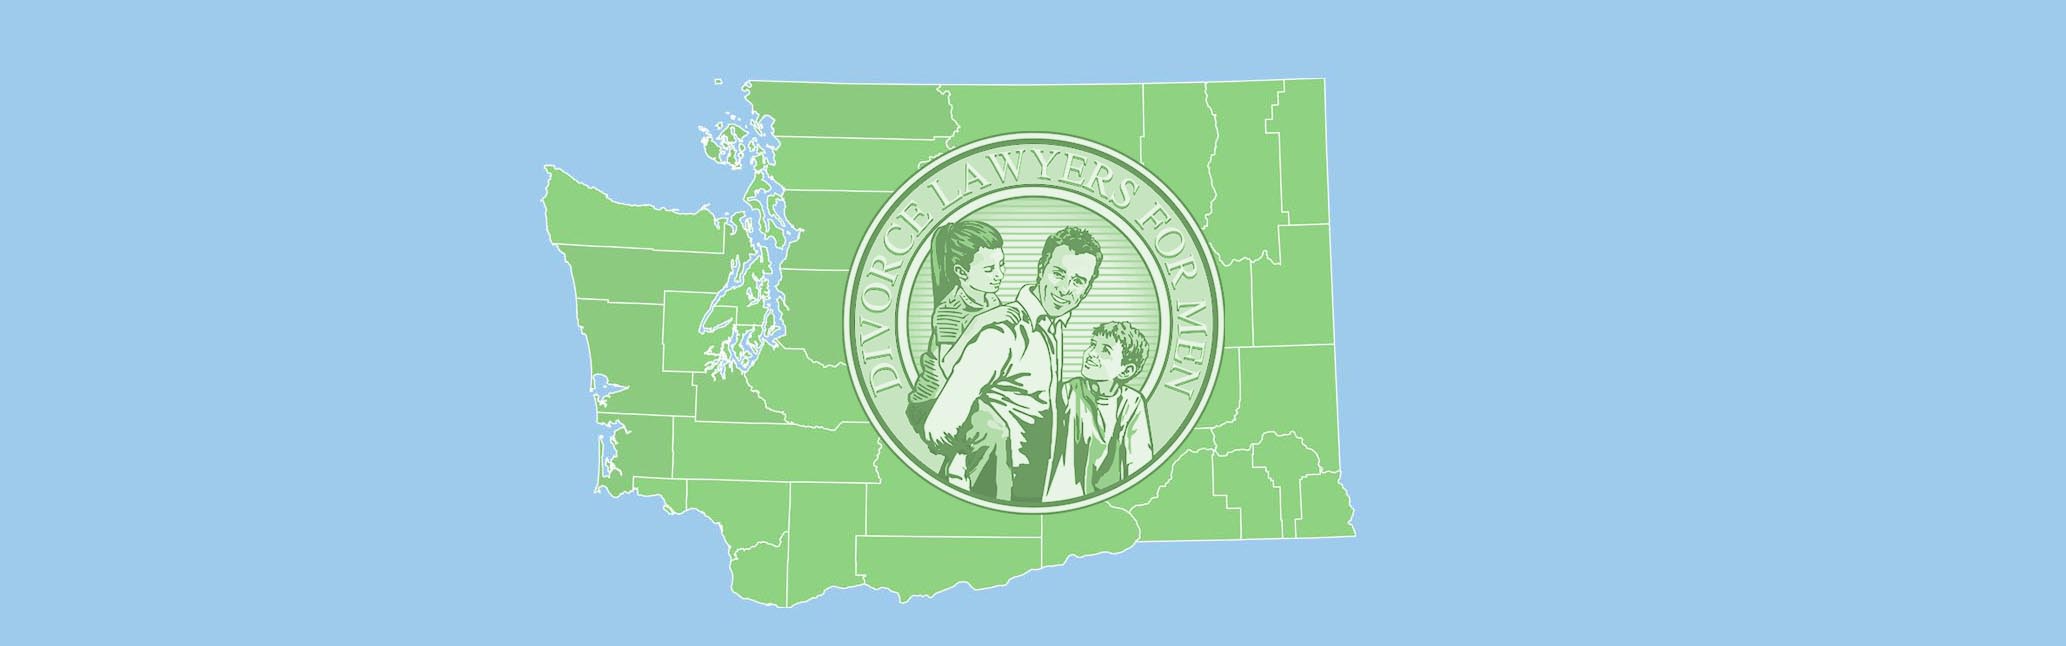 Washington-State-Legal-Network-Image